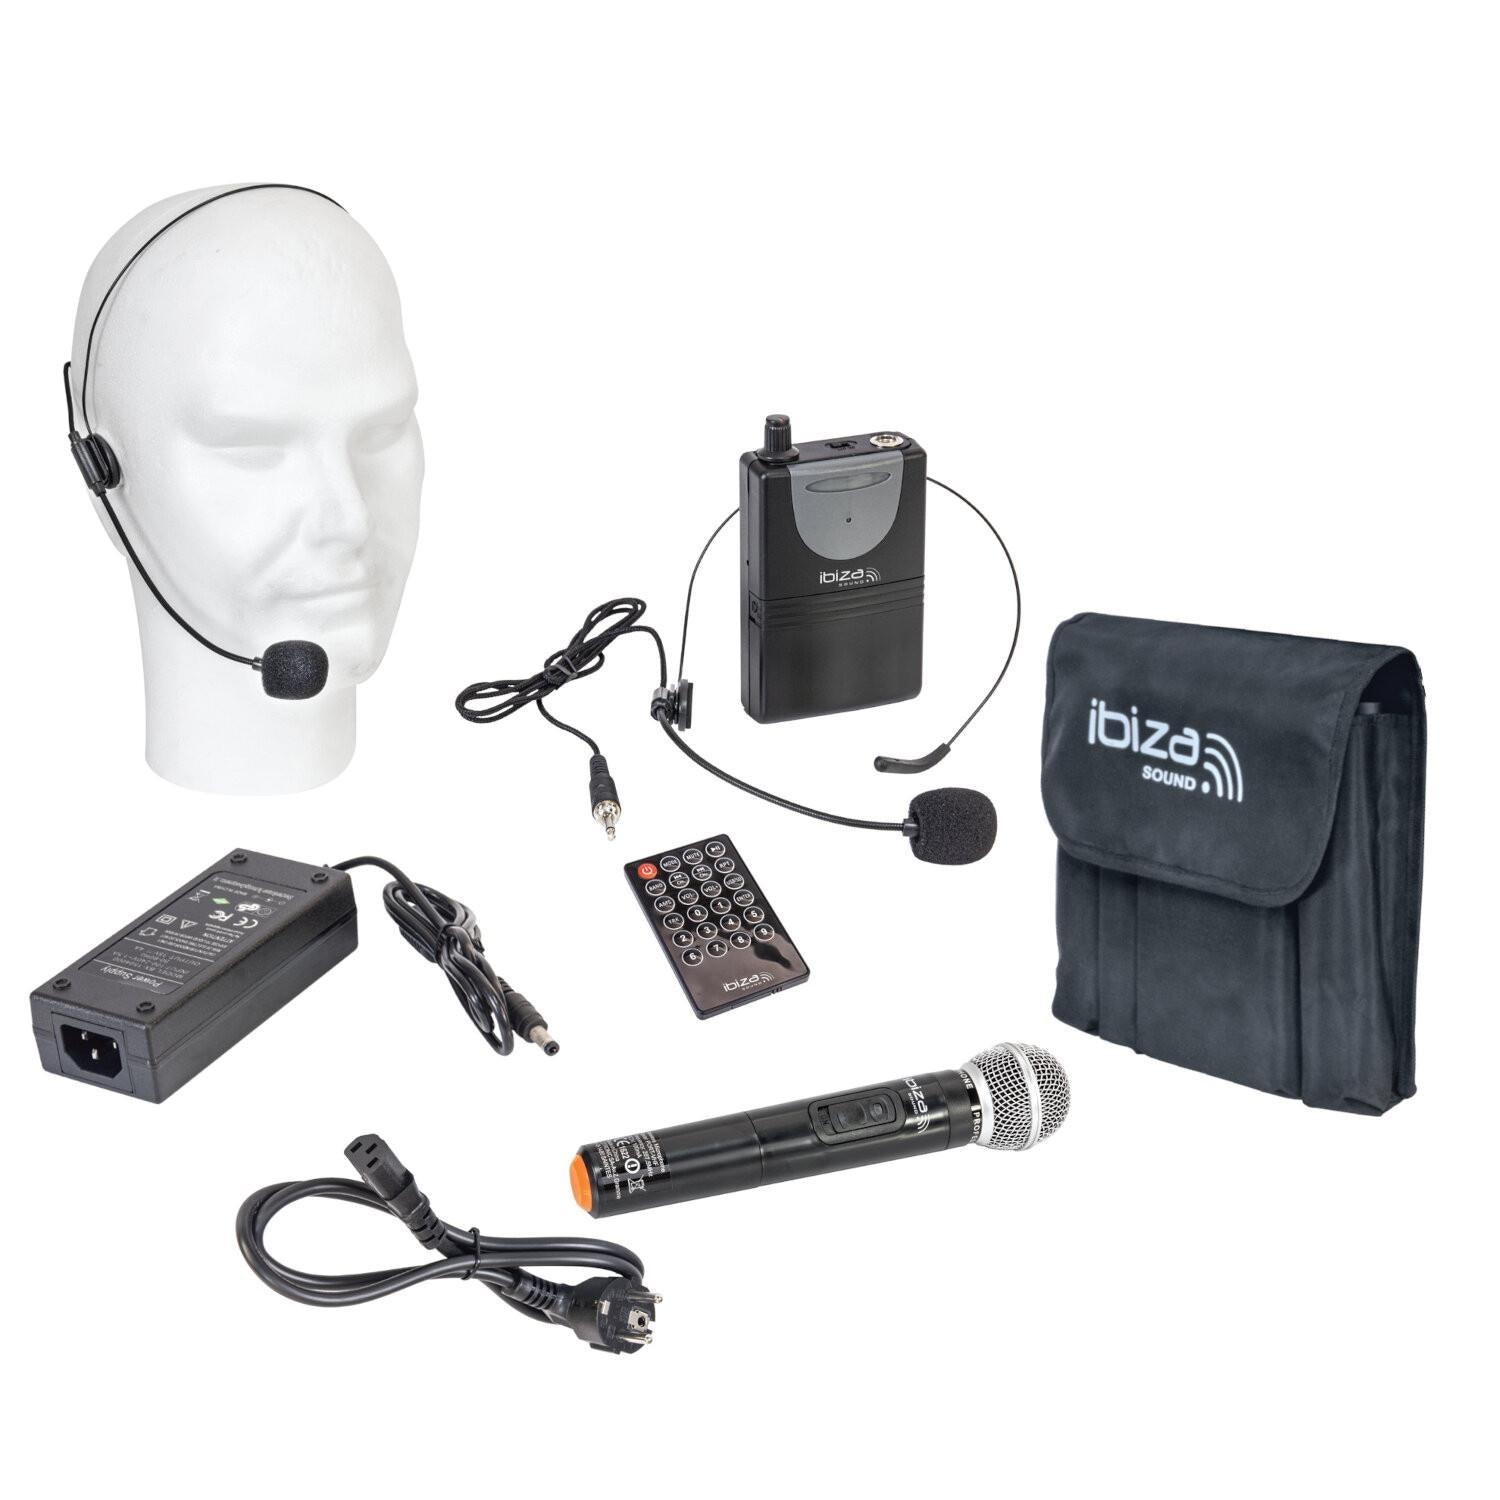 Ibiza PORT12VHF-MKII-TWS 12" Portable PA System - DY Pro Audio